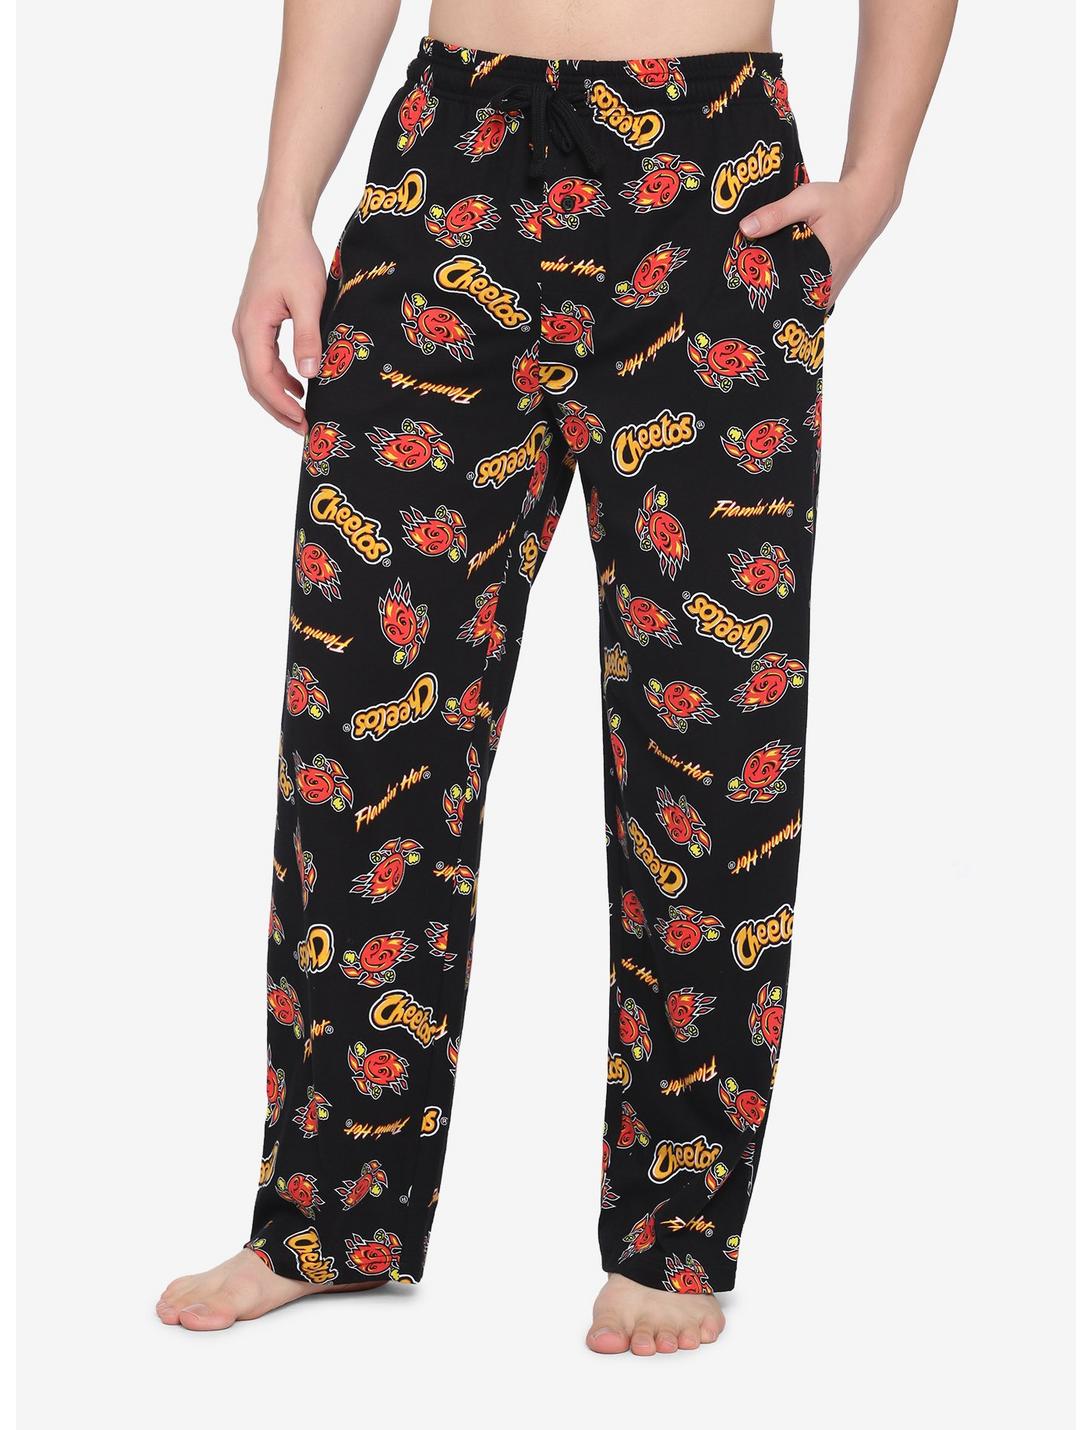 Cheetos Flamin' Hot Logos Pajama Pants, MULTI, hi-res